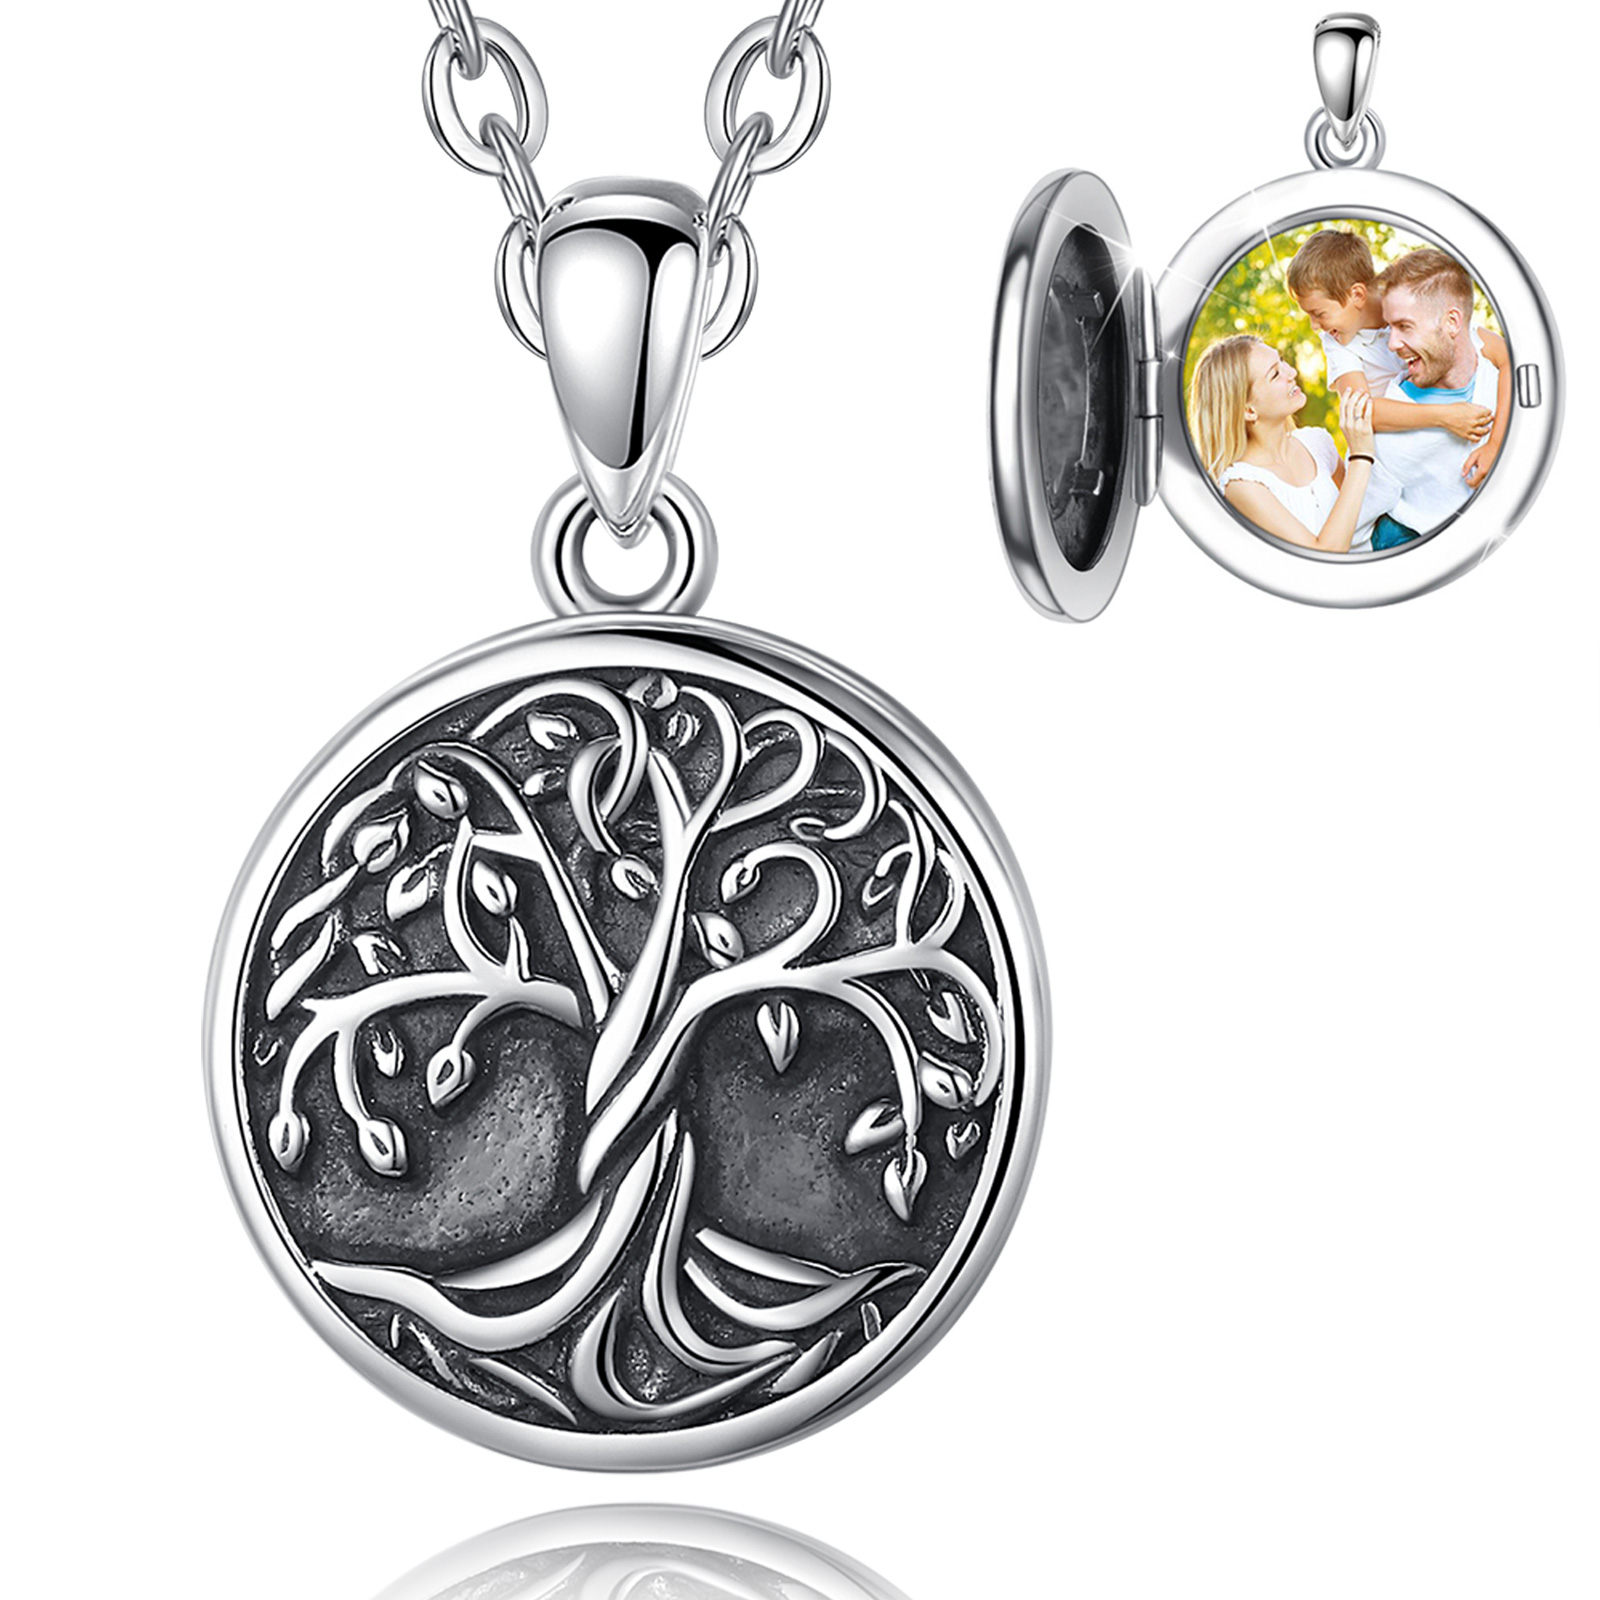 Merryshine 925 sterling silver custom photo locket pendant necklace tree of life necklaces